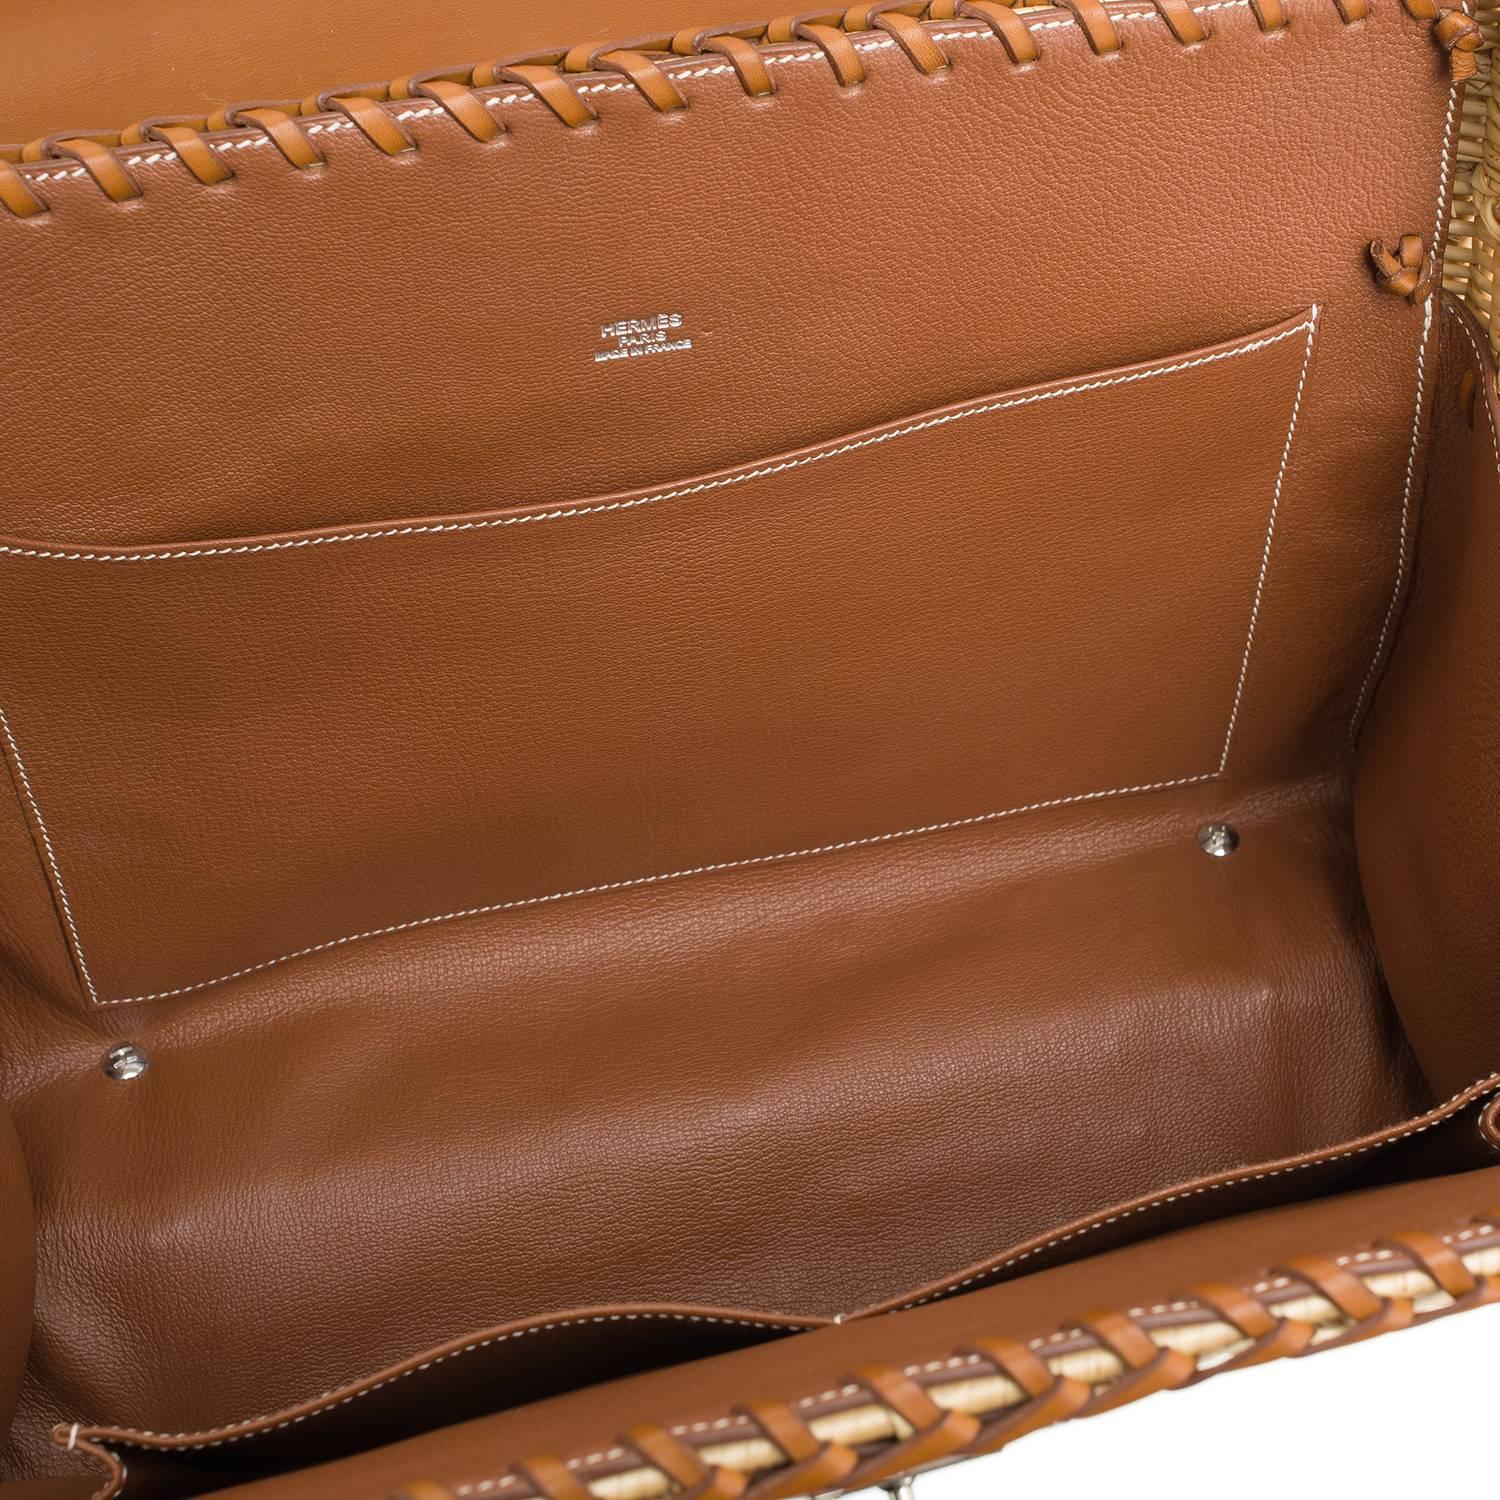 Women's Hermes Wicker and Barenia Leather Kelly Picnic Bag 35cm Palladium Hardware